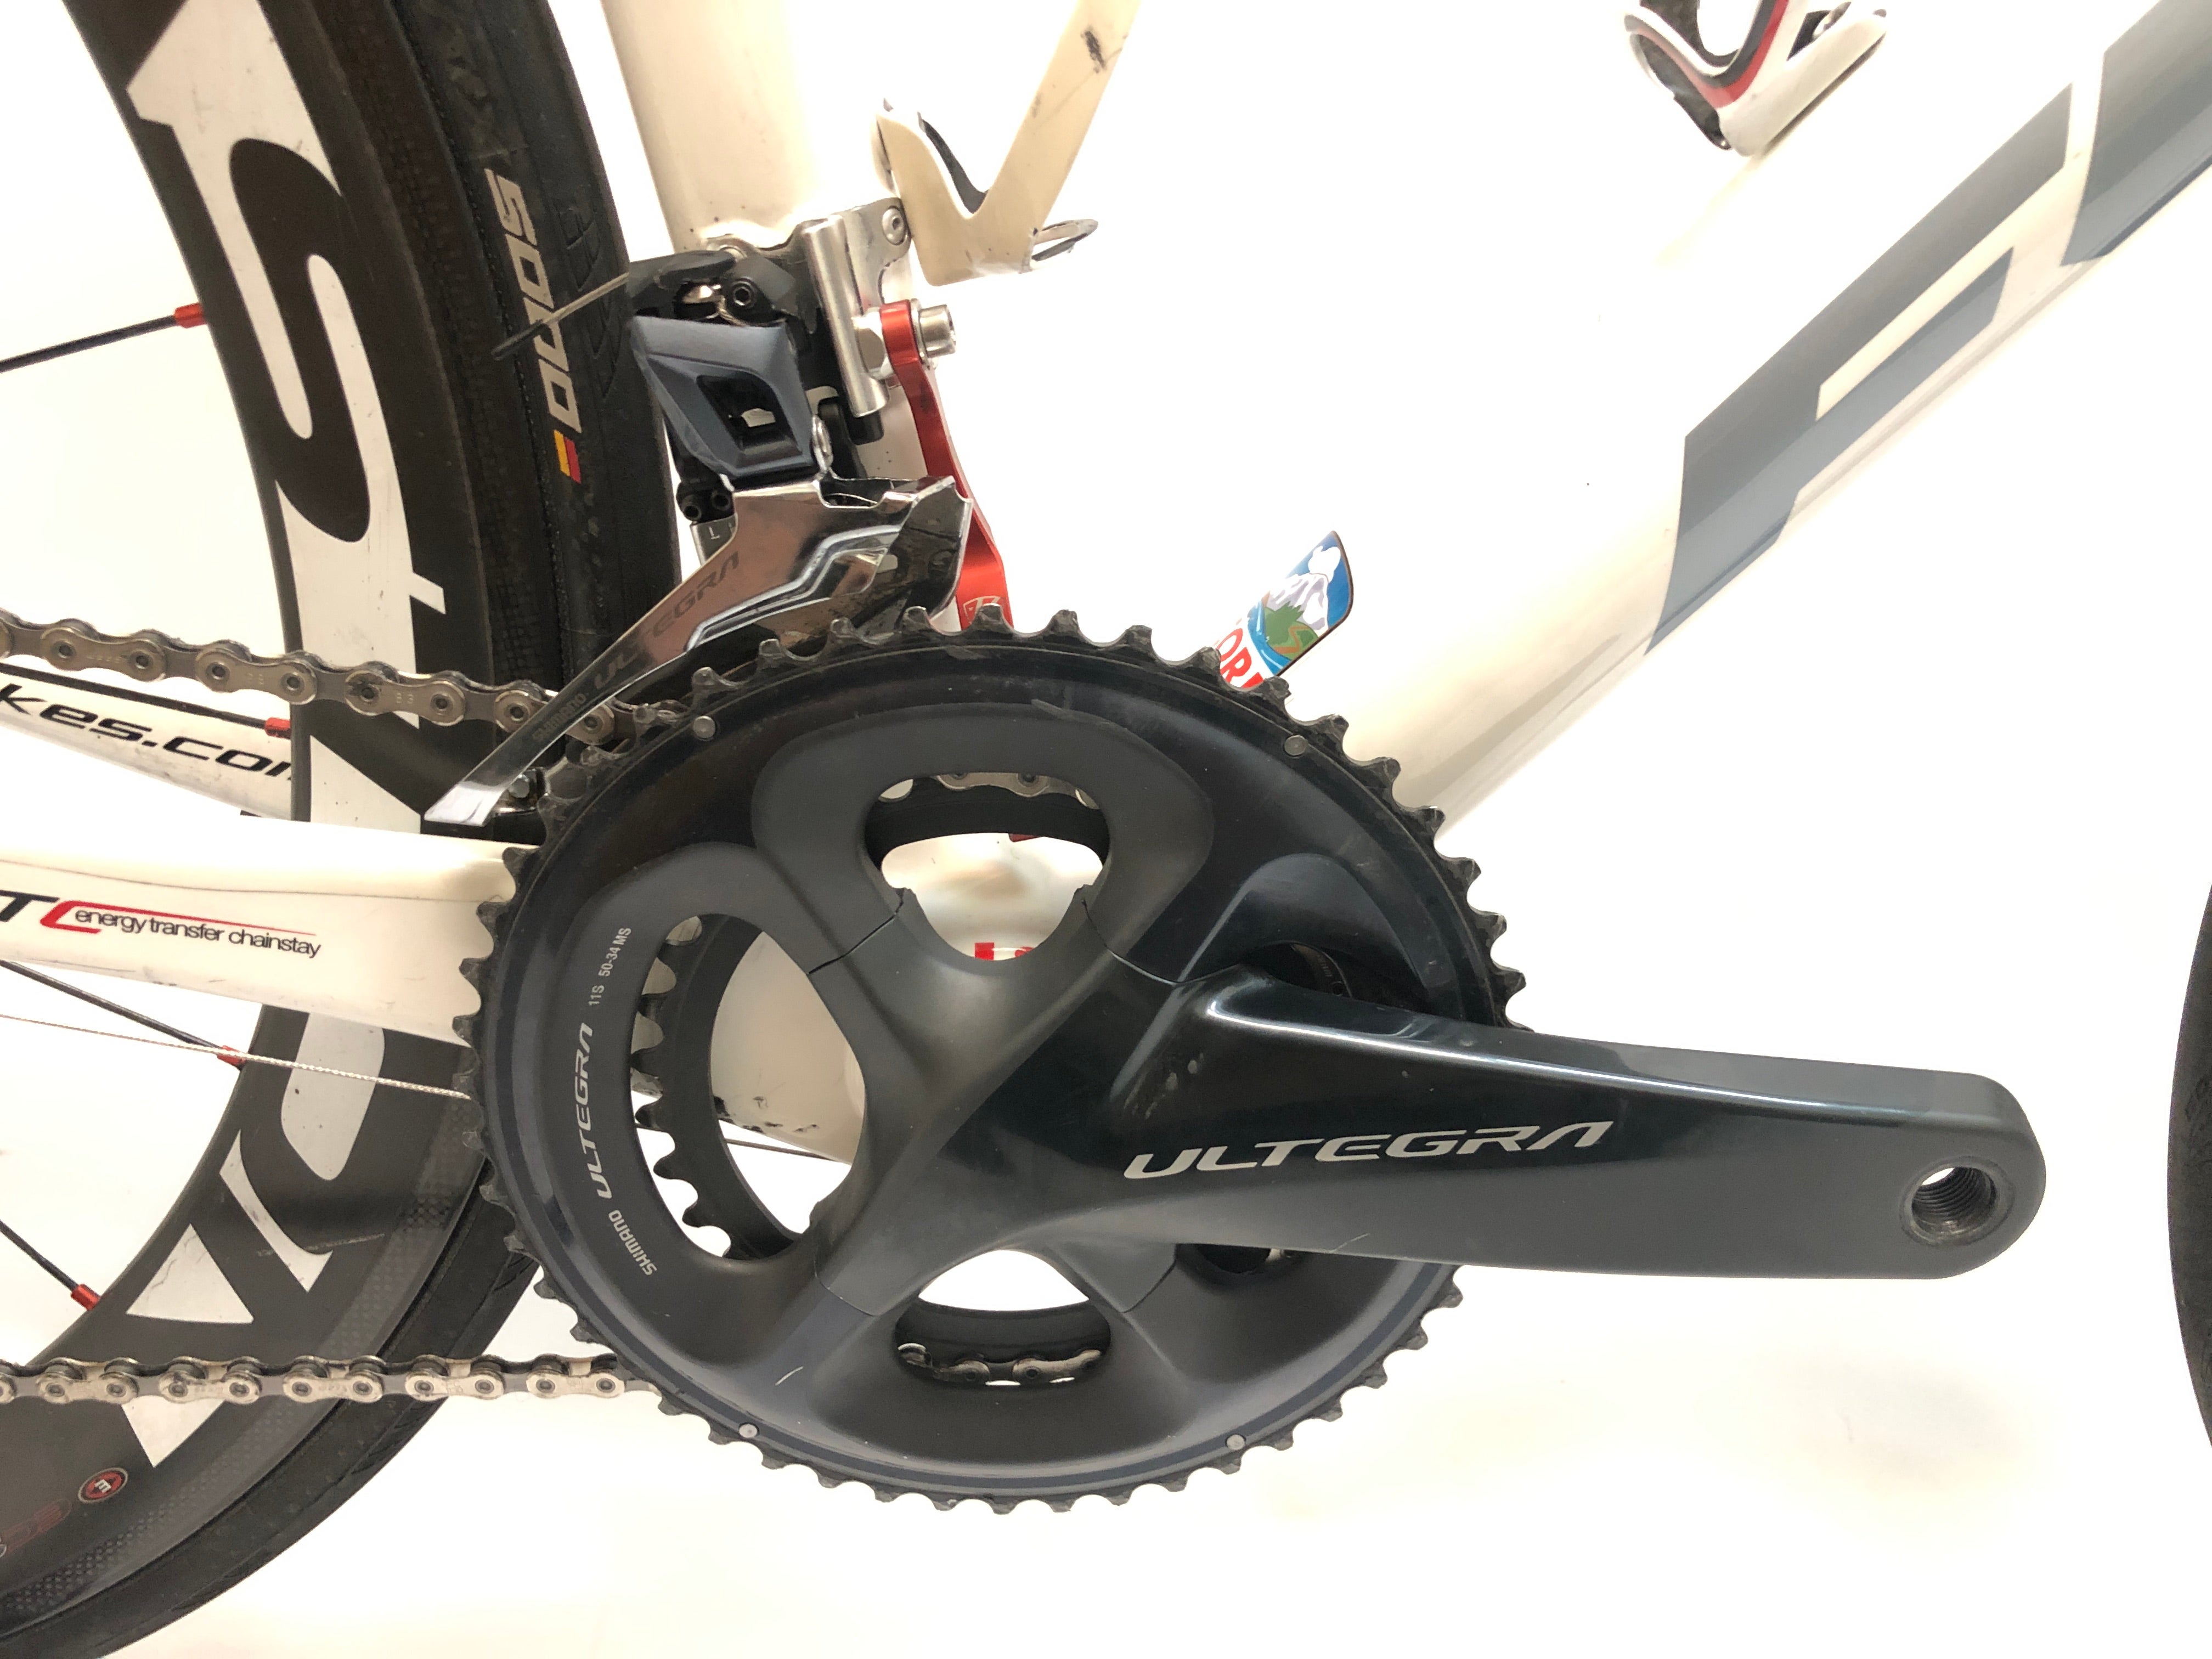 56cm Carbon Fuji SST 2.0 Road Bike w/ Carbon Wheels & Shimano 